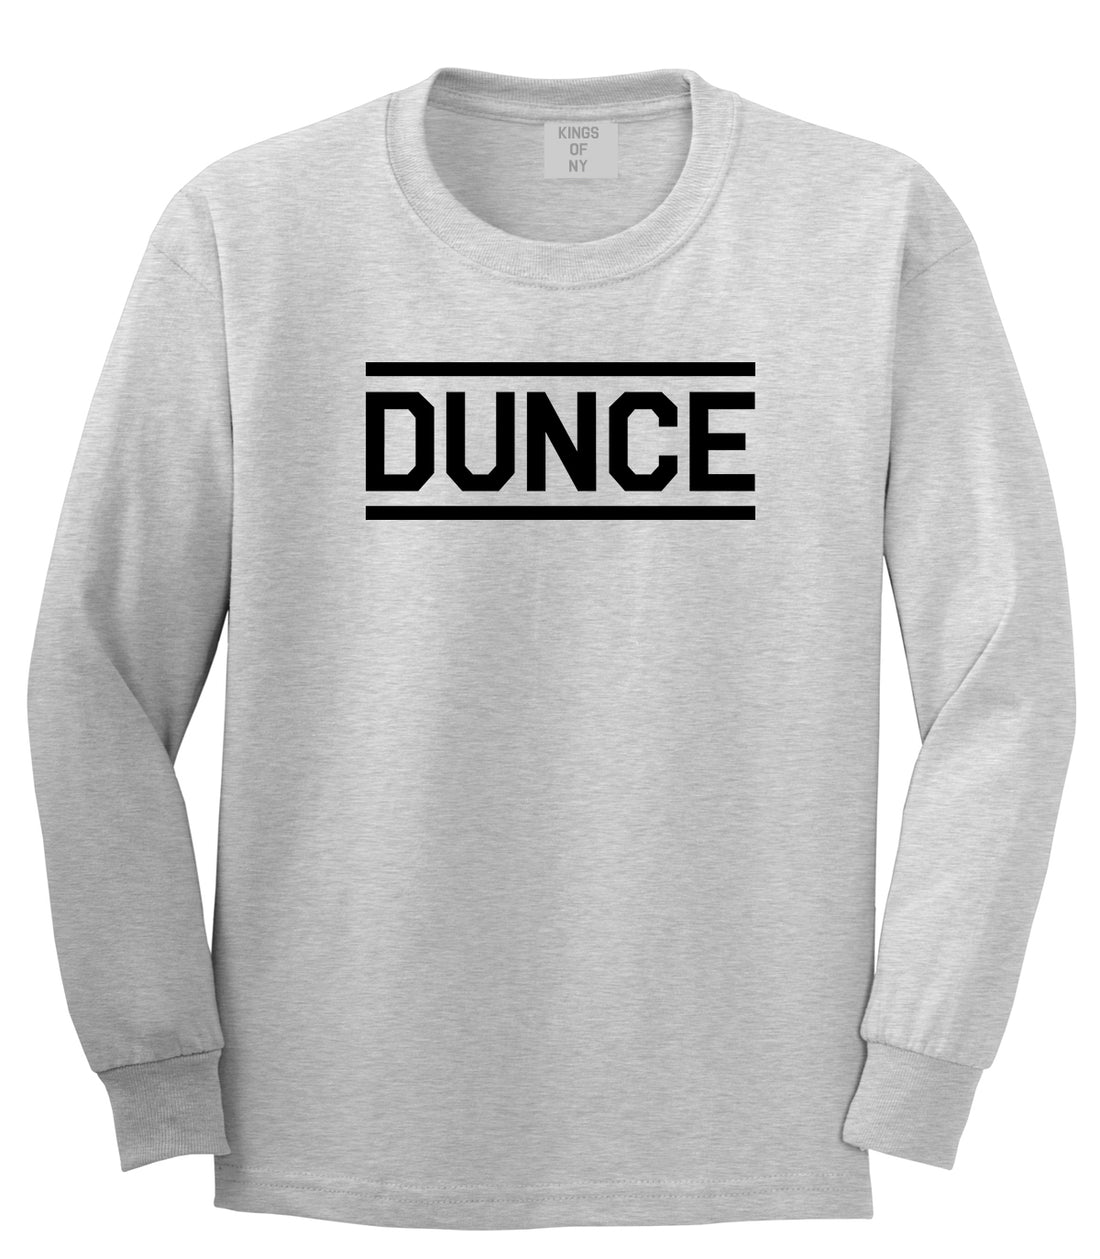 Dunce Funny Mens Grey Long Sleeve T-Shirt by Kings Of NY